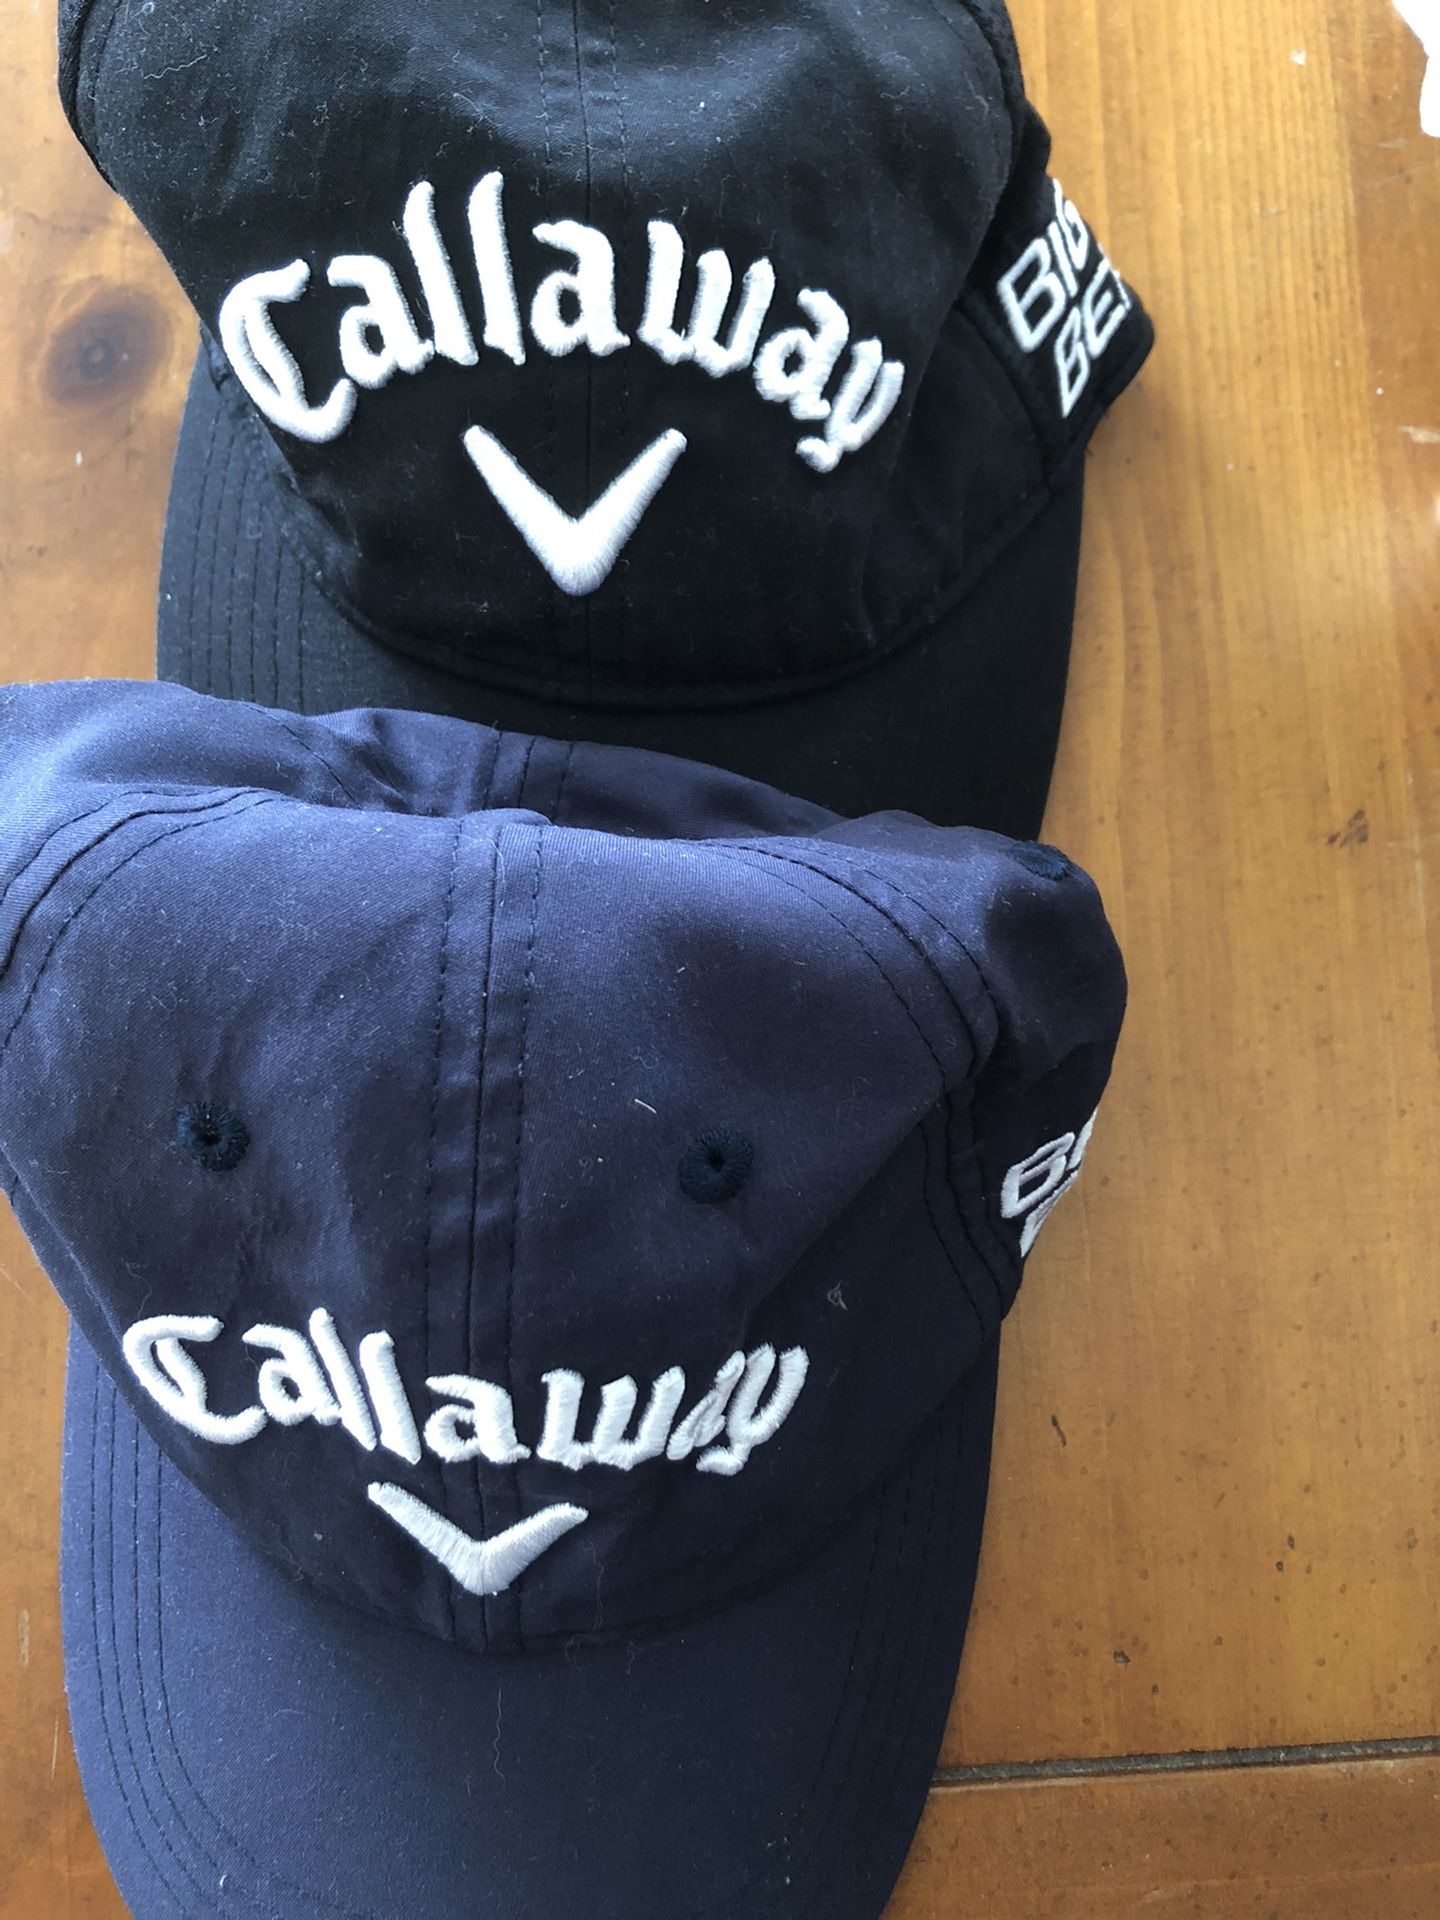 Callaway caps